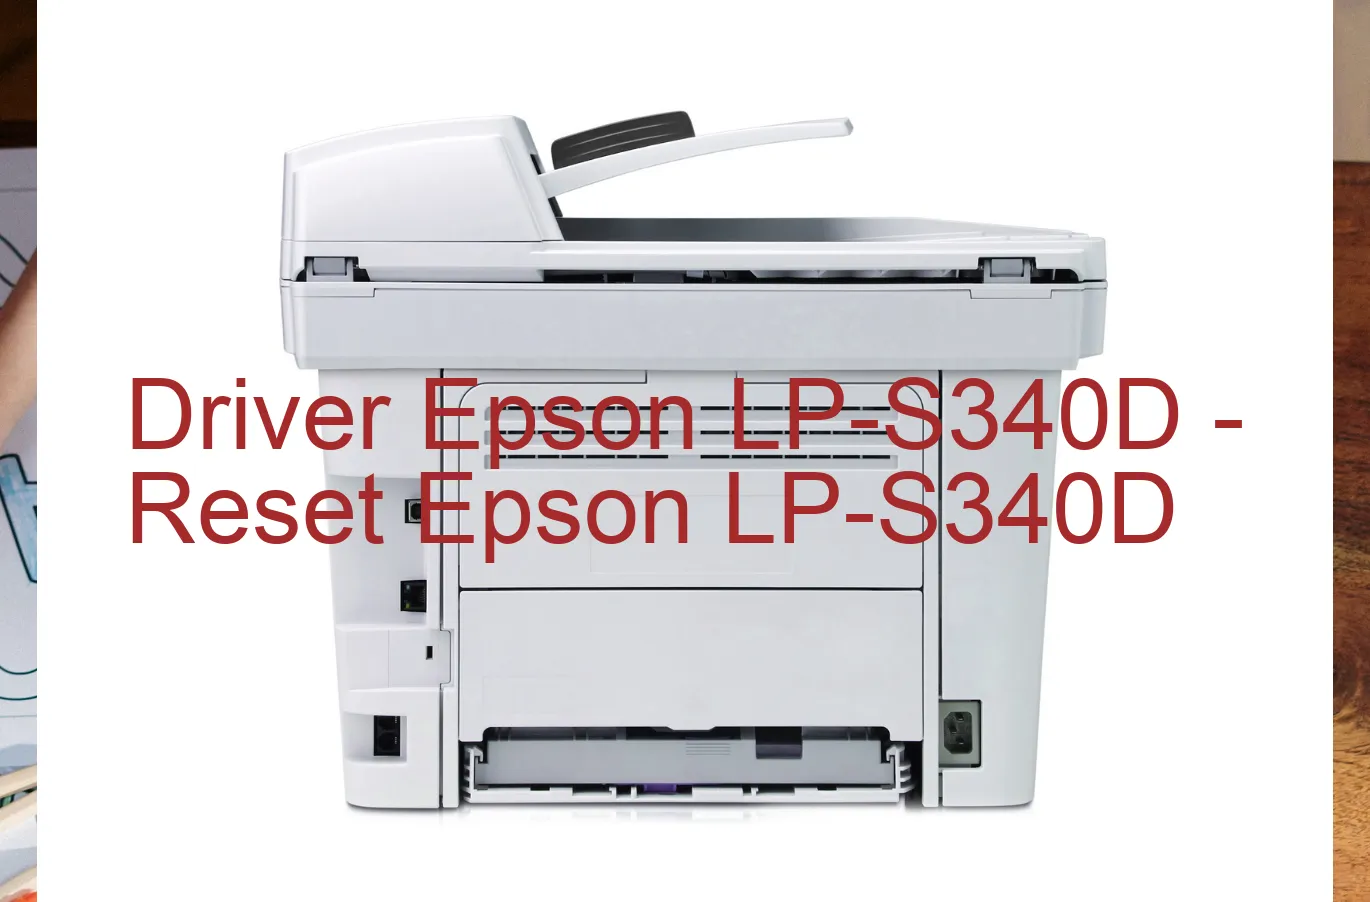 Epson LP-S340Dのドライバー、Epson LP-S340Dのリセットソフトウェア